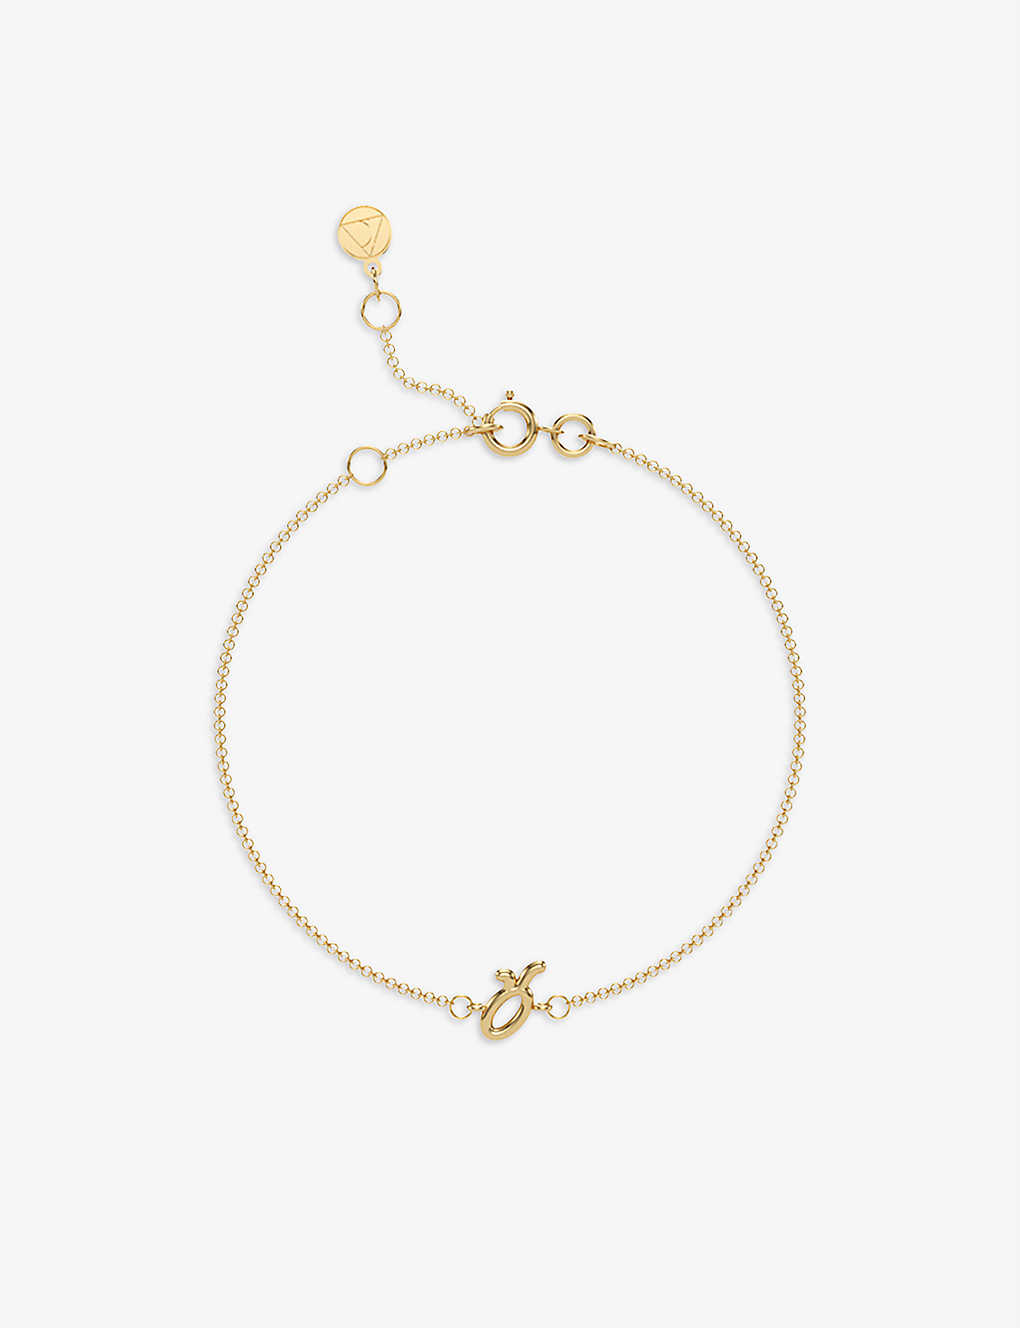 The Alkemistry Taurus Zodiac 18ct Recycled Yellow Gold Bracelet